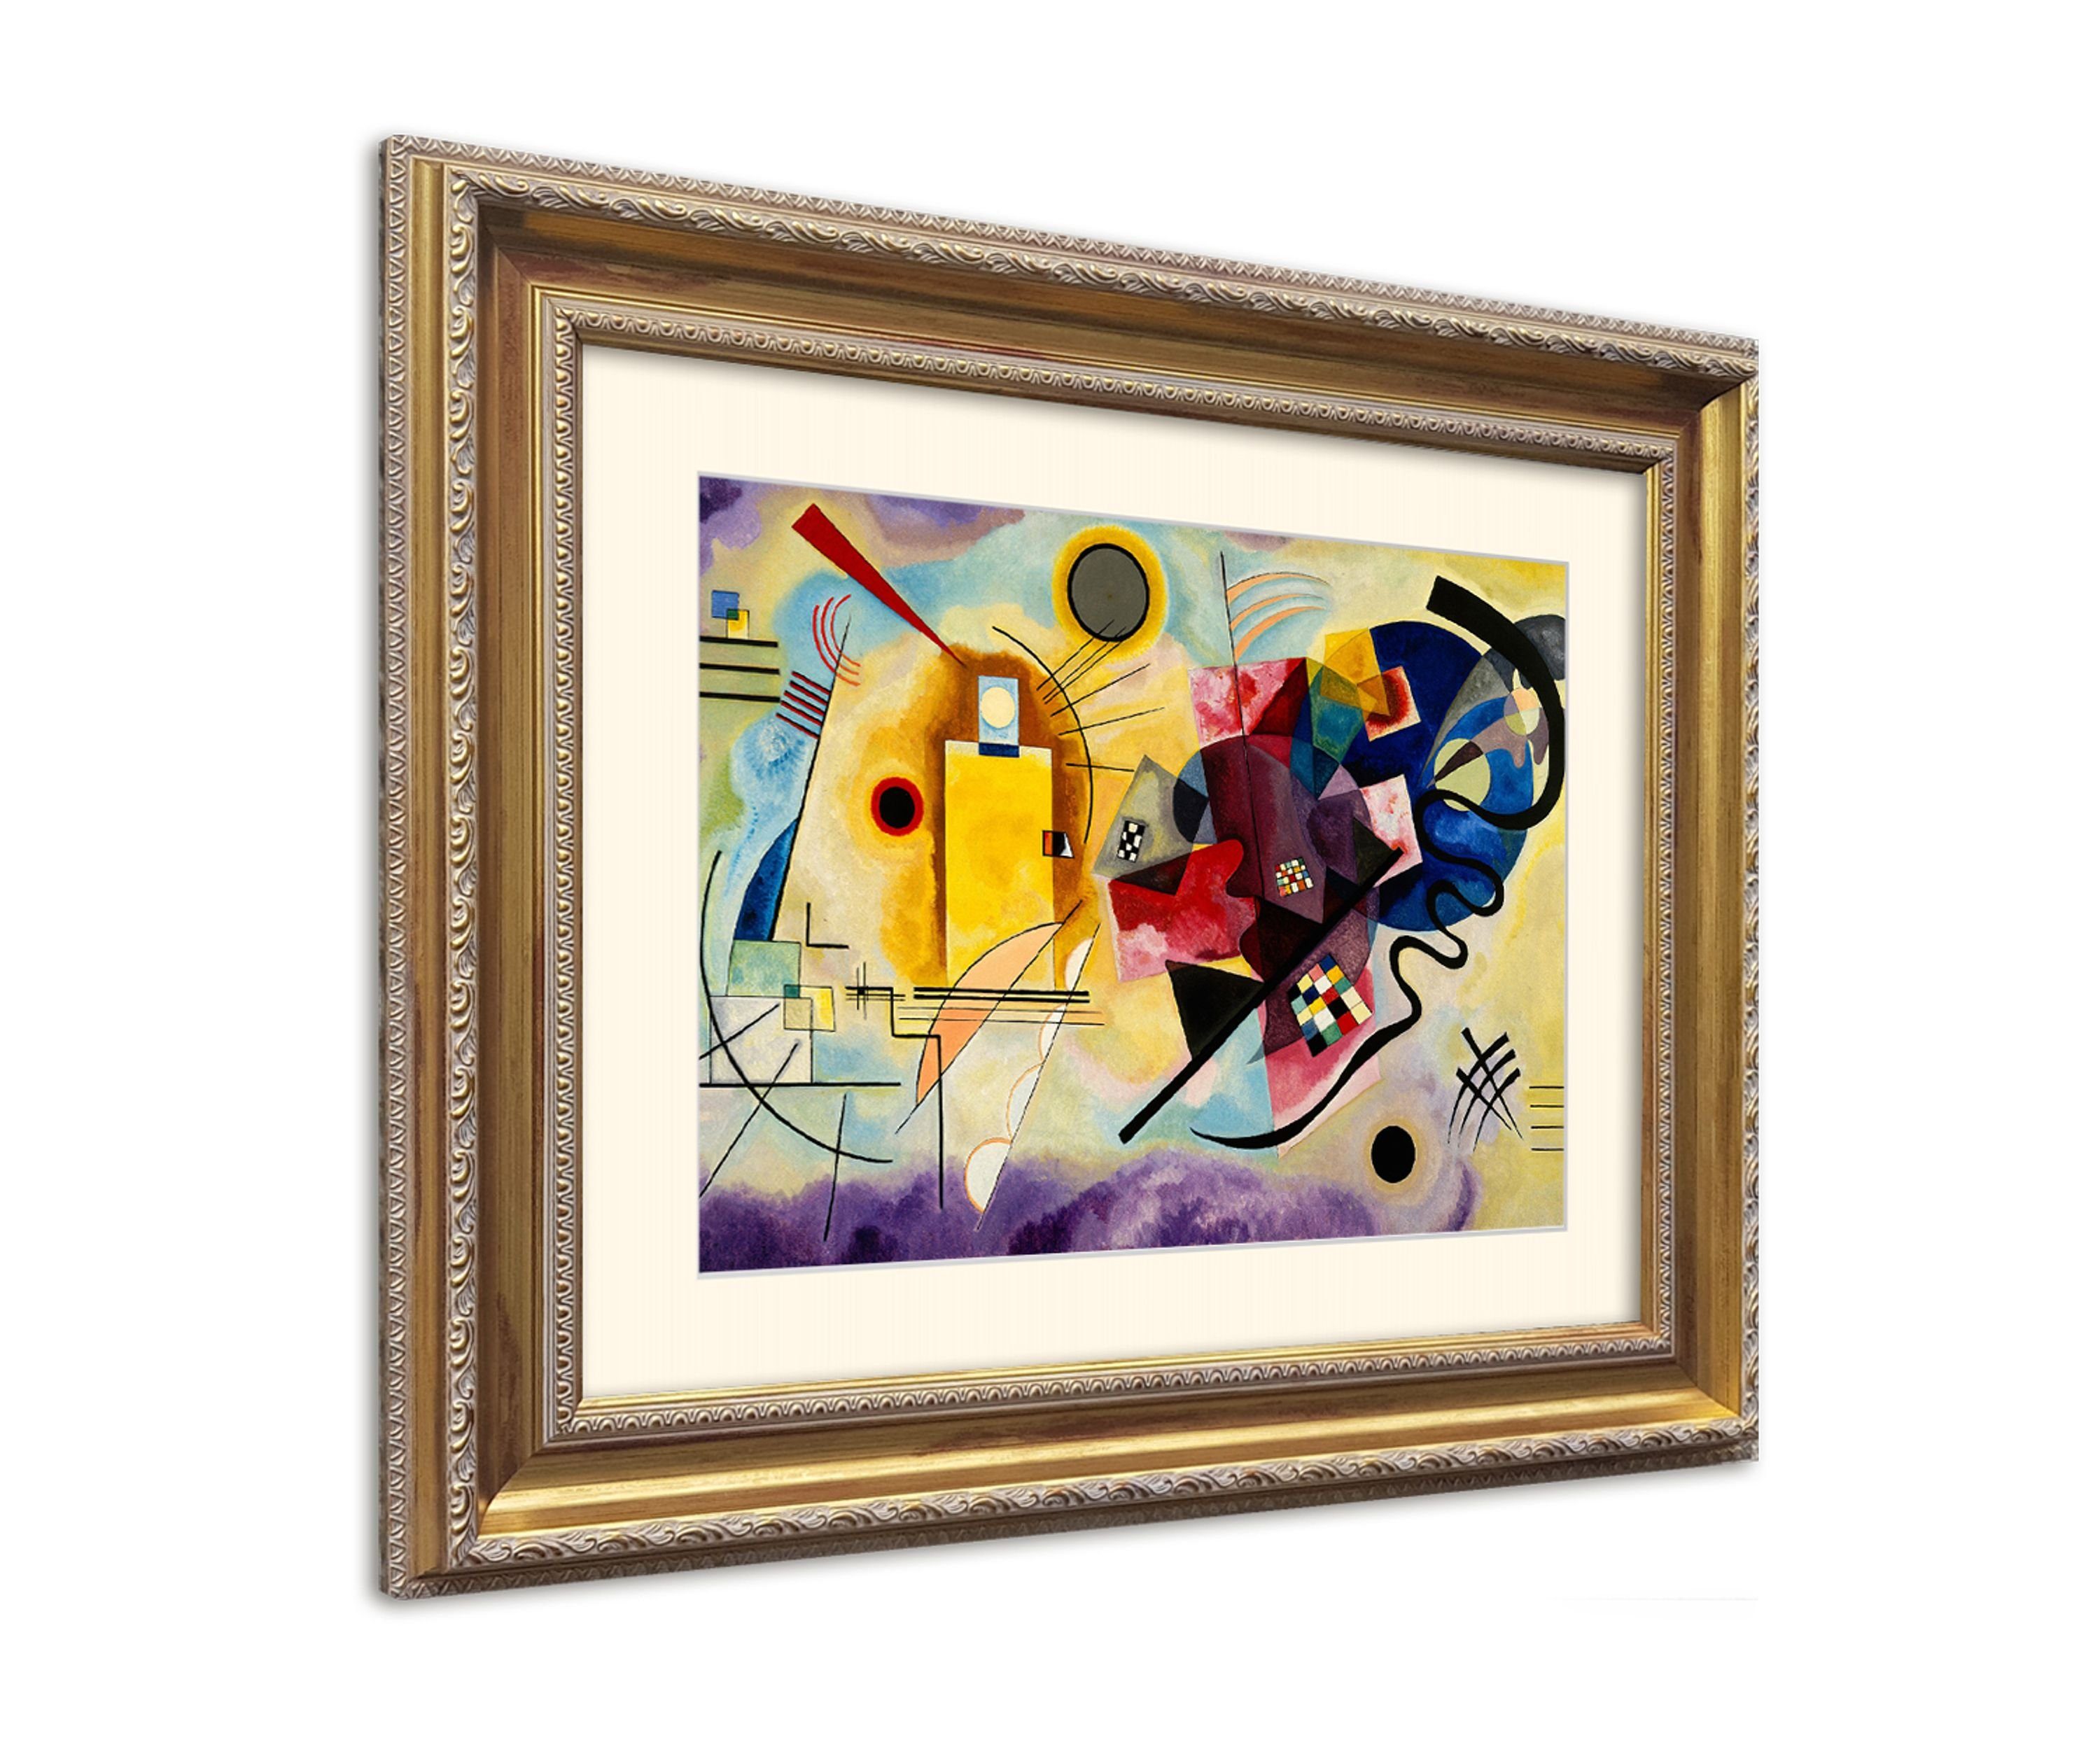 Red mit Rahmen Bild / Blue Barock-Rahmen artissimo 63x53cm Wassily and Poster mit Kandinsky: Kandinsky Wandbild, Bild / Yellow, erahmt